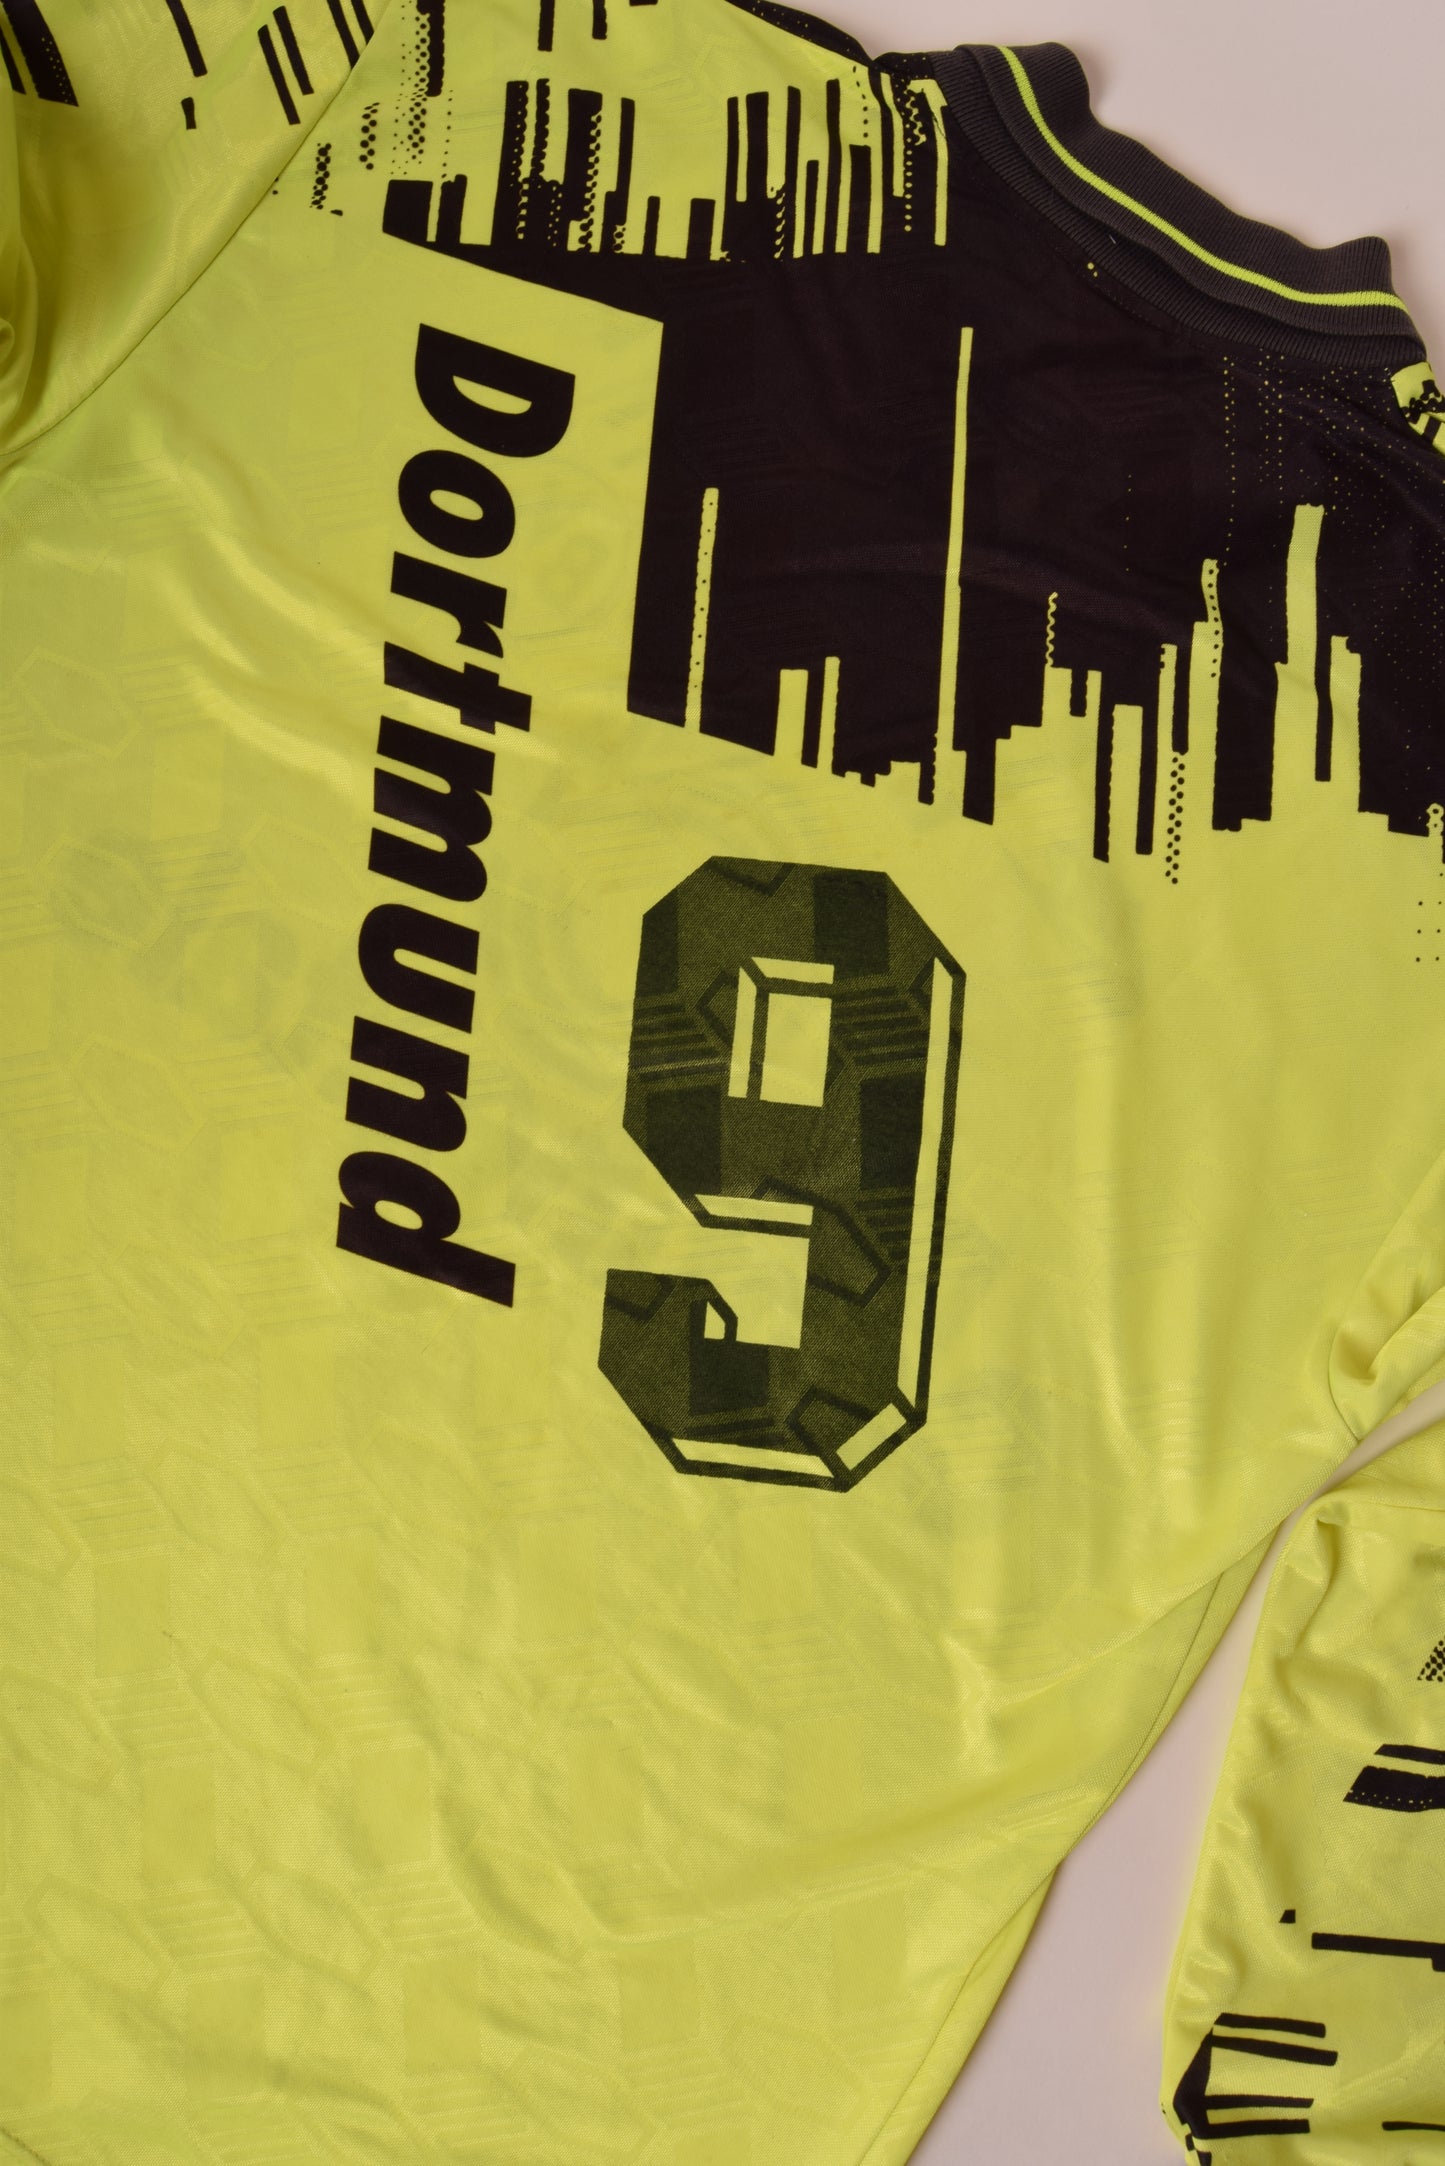 Vintage BVB Borussia Dortmund Nike Premier Home Football Shirt 1993 - 1994 Die Continentale Size L #9 Yellow Long Sleeve Neon